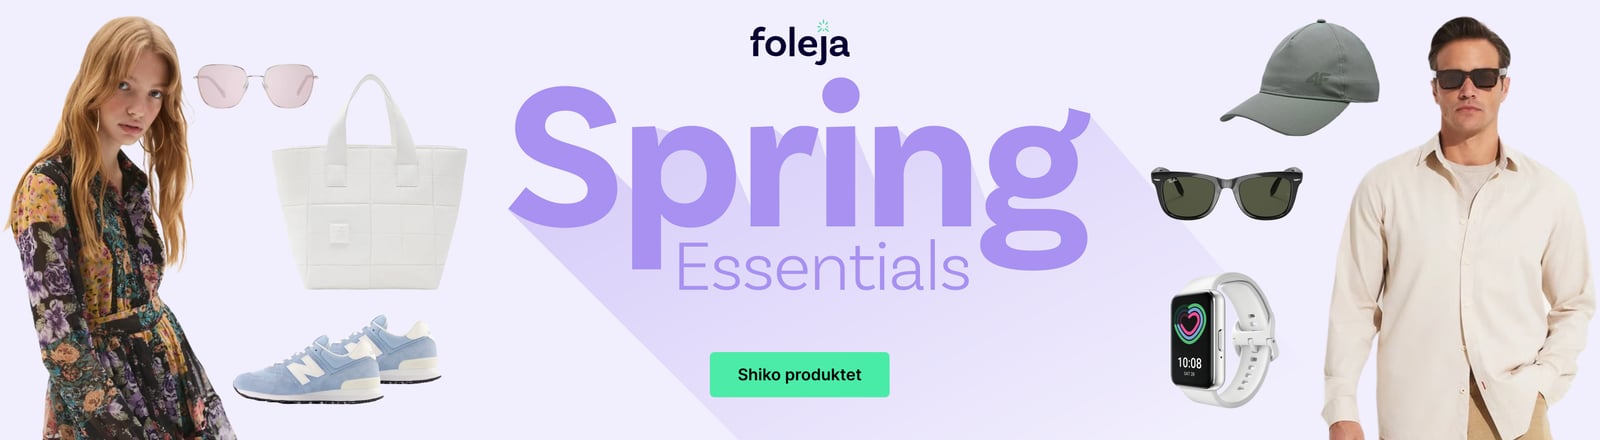 spring-essentials-web-1